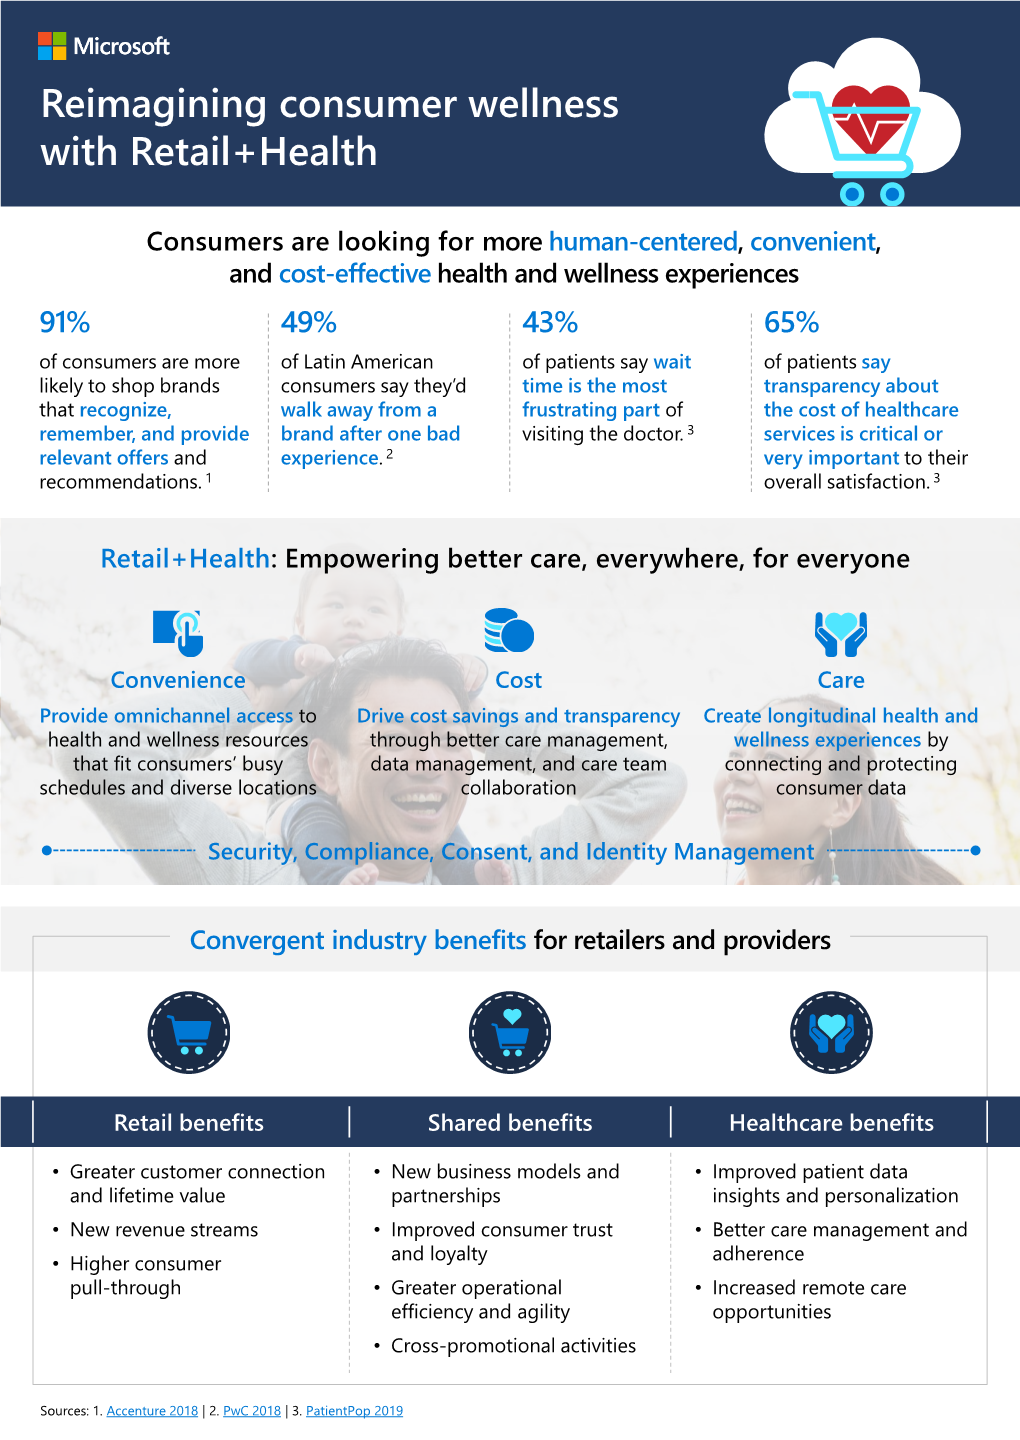 Reimagining Consumer Wellness with Retail+Health